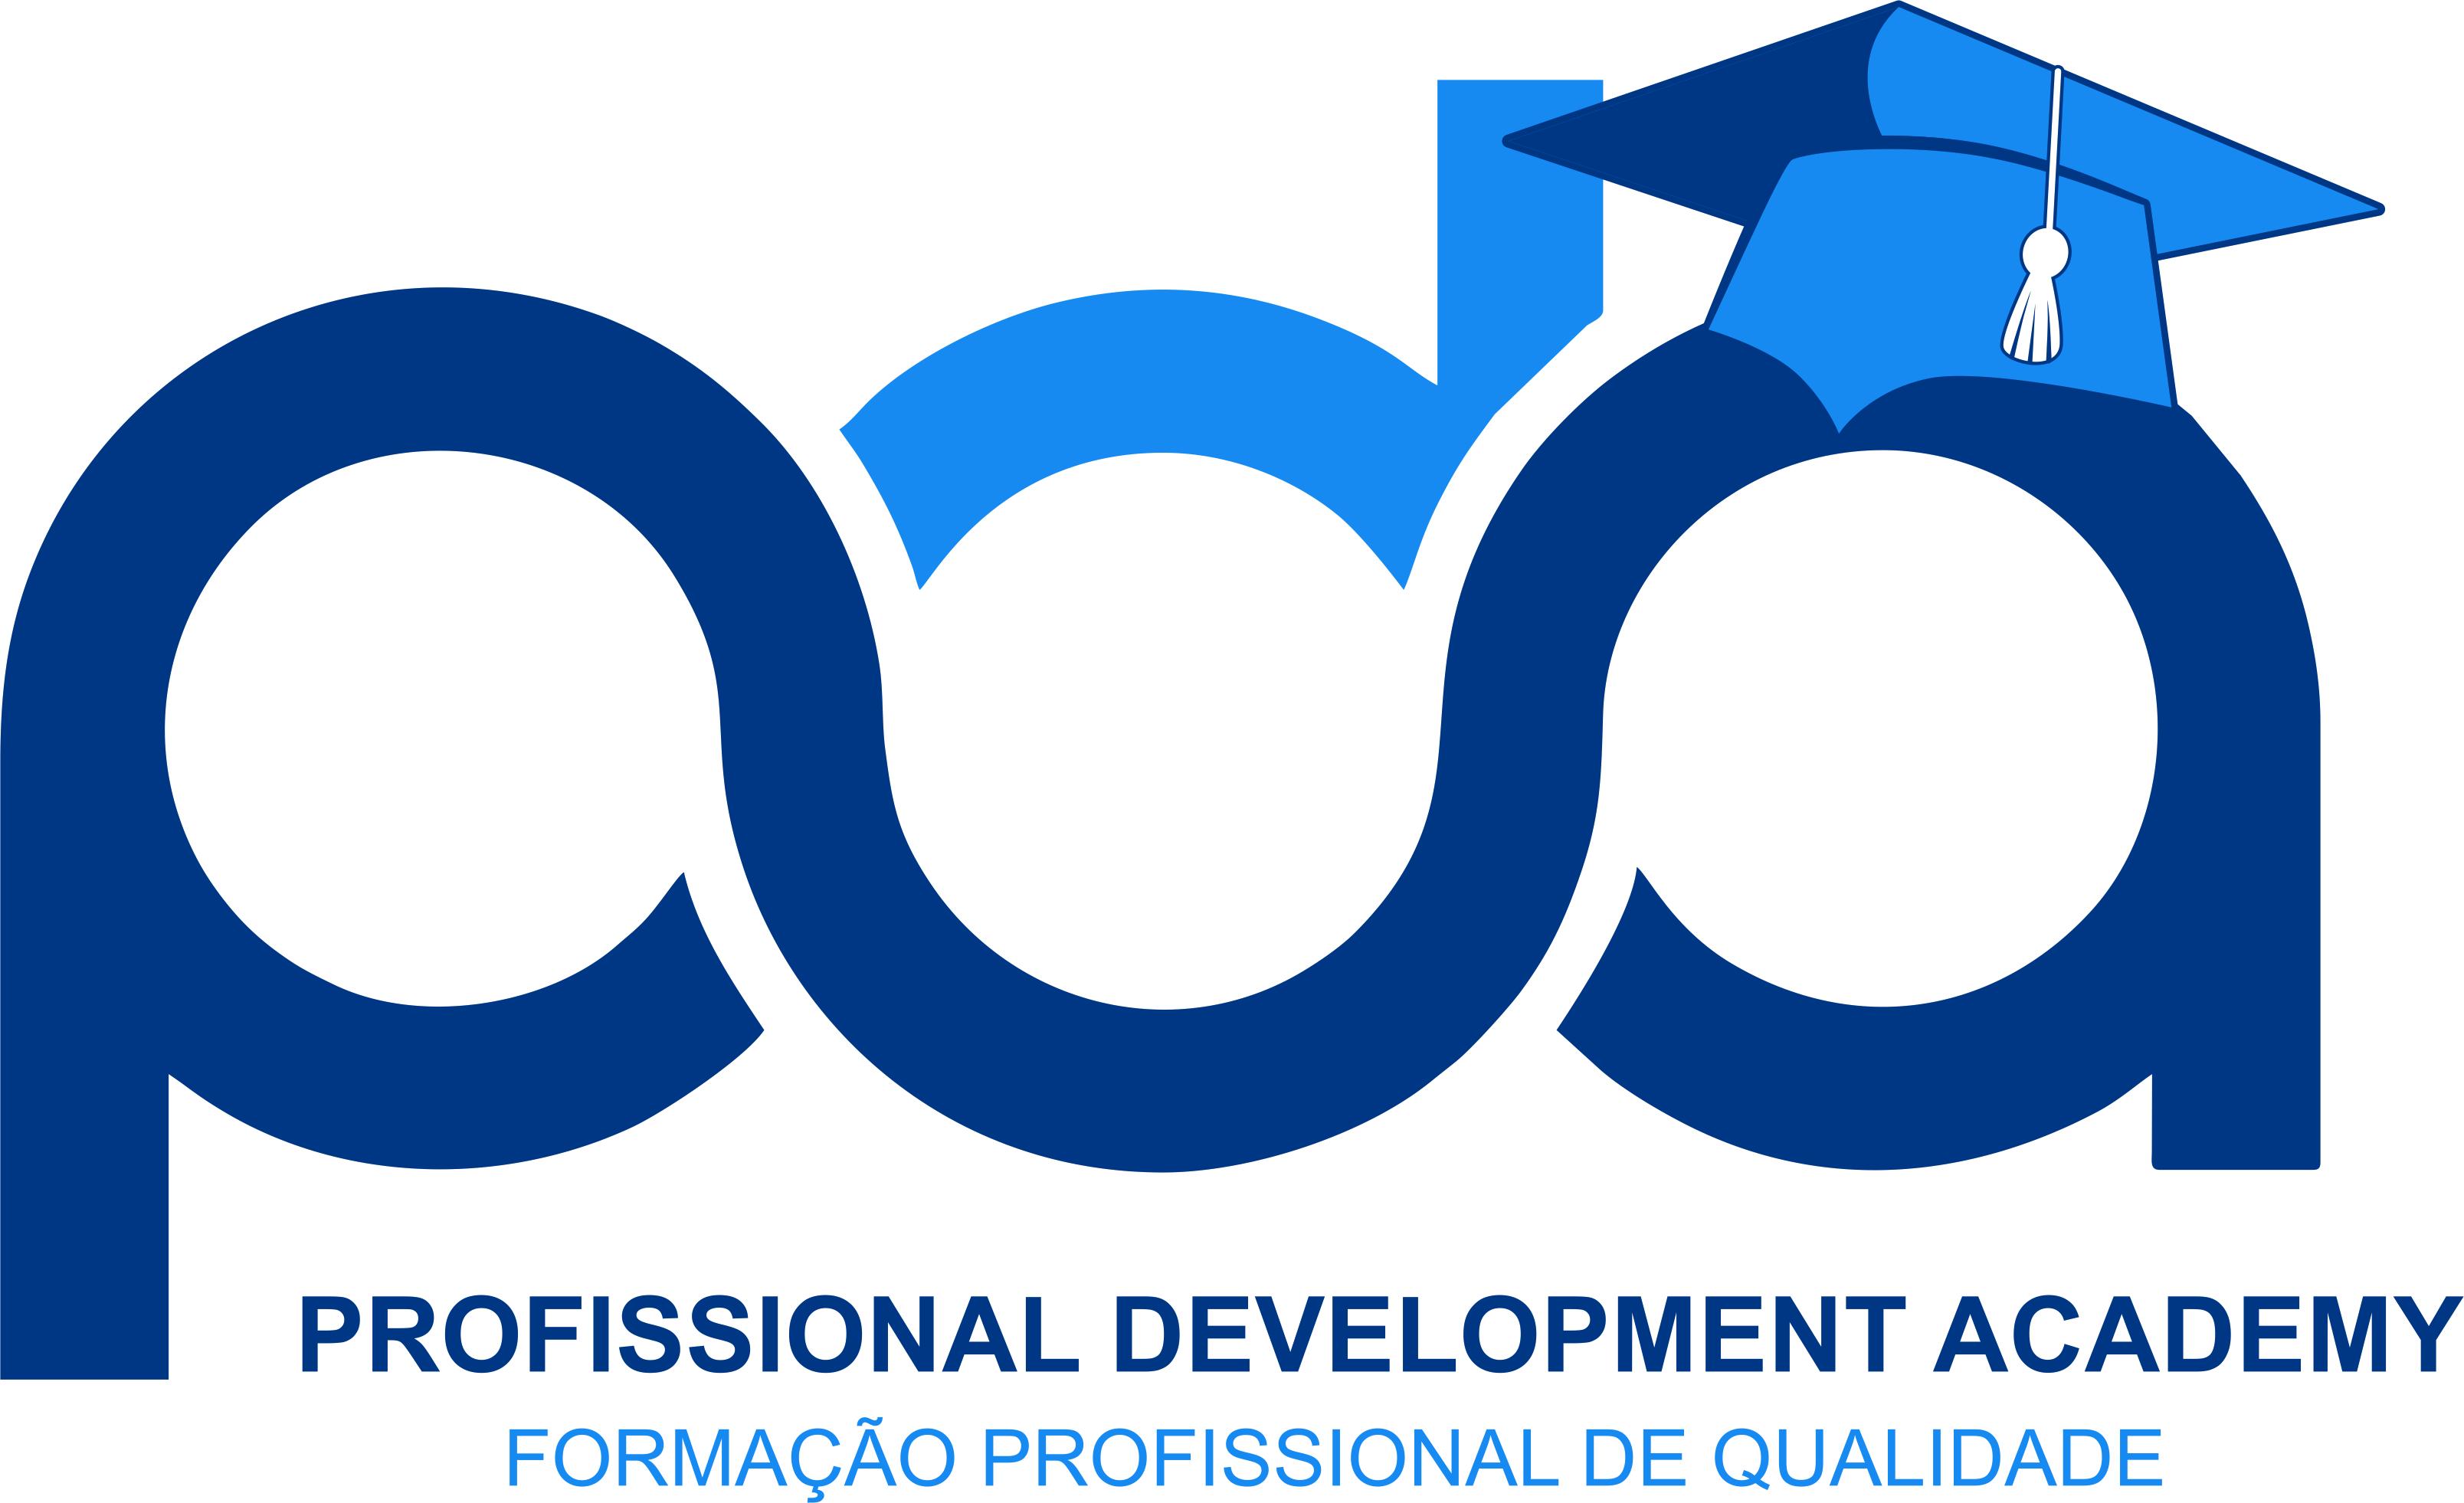 Professional Development Academy, Consulting, Lda